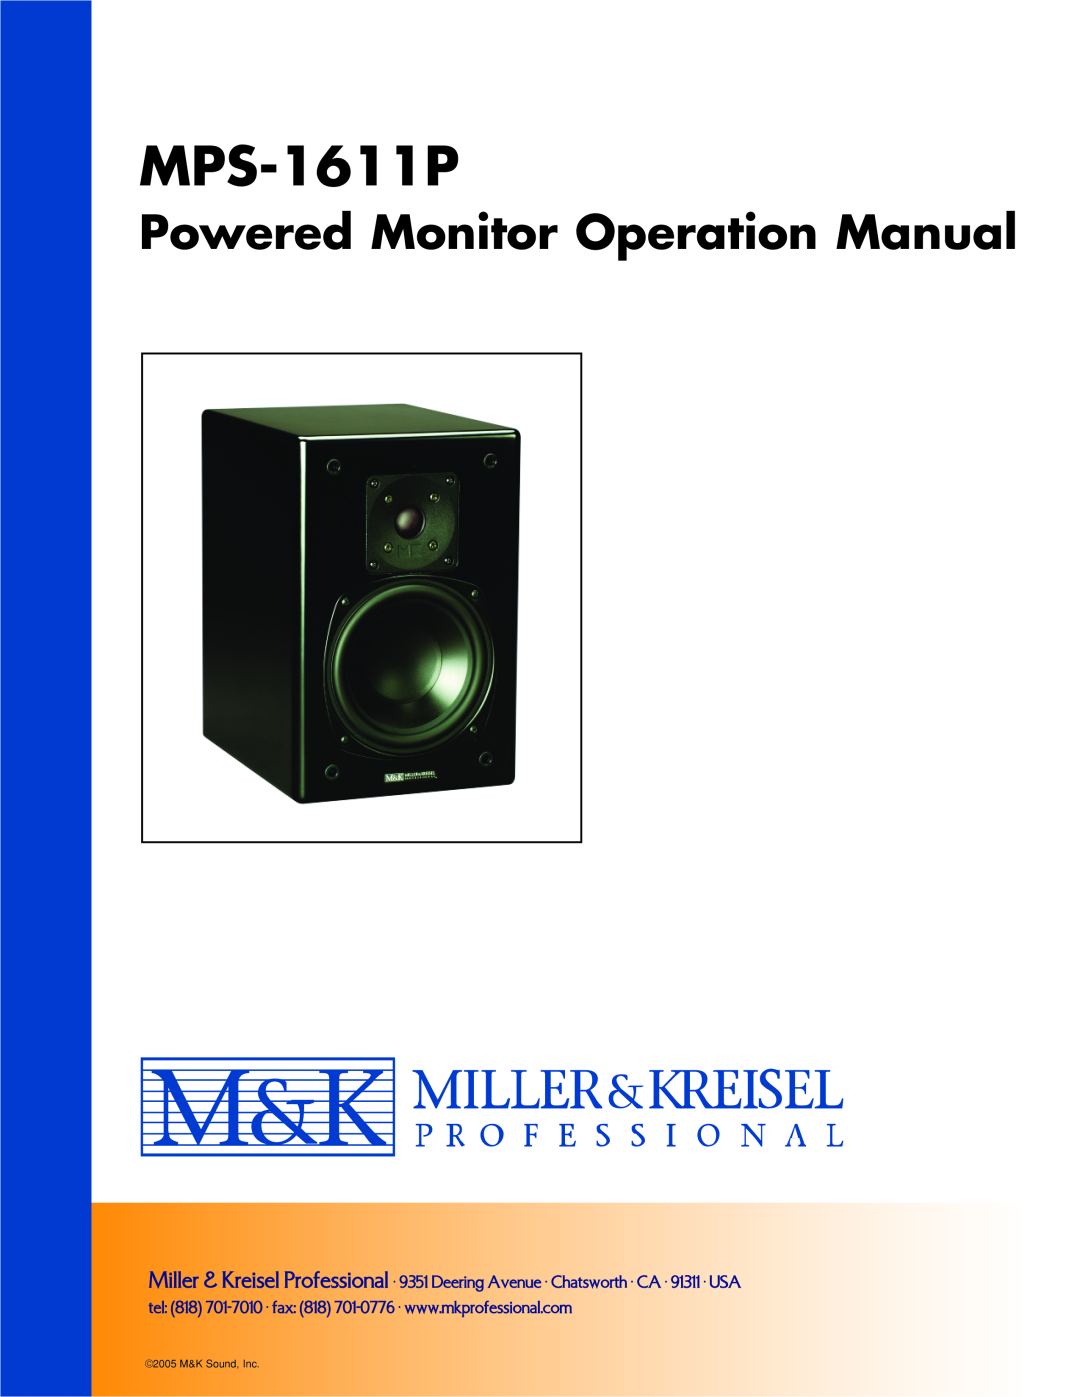 MK Sound MPS-1611P operation manual 